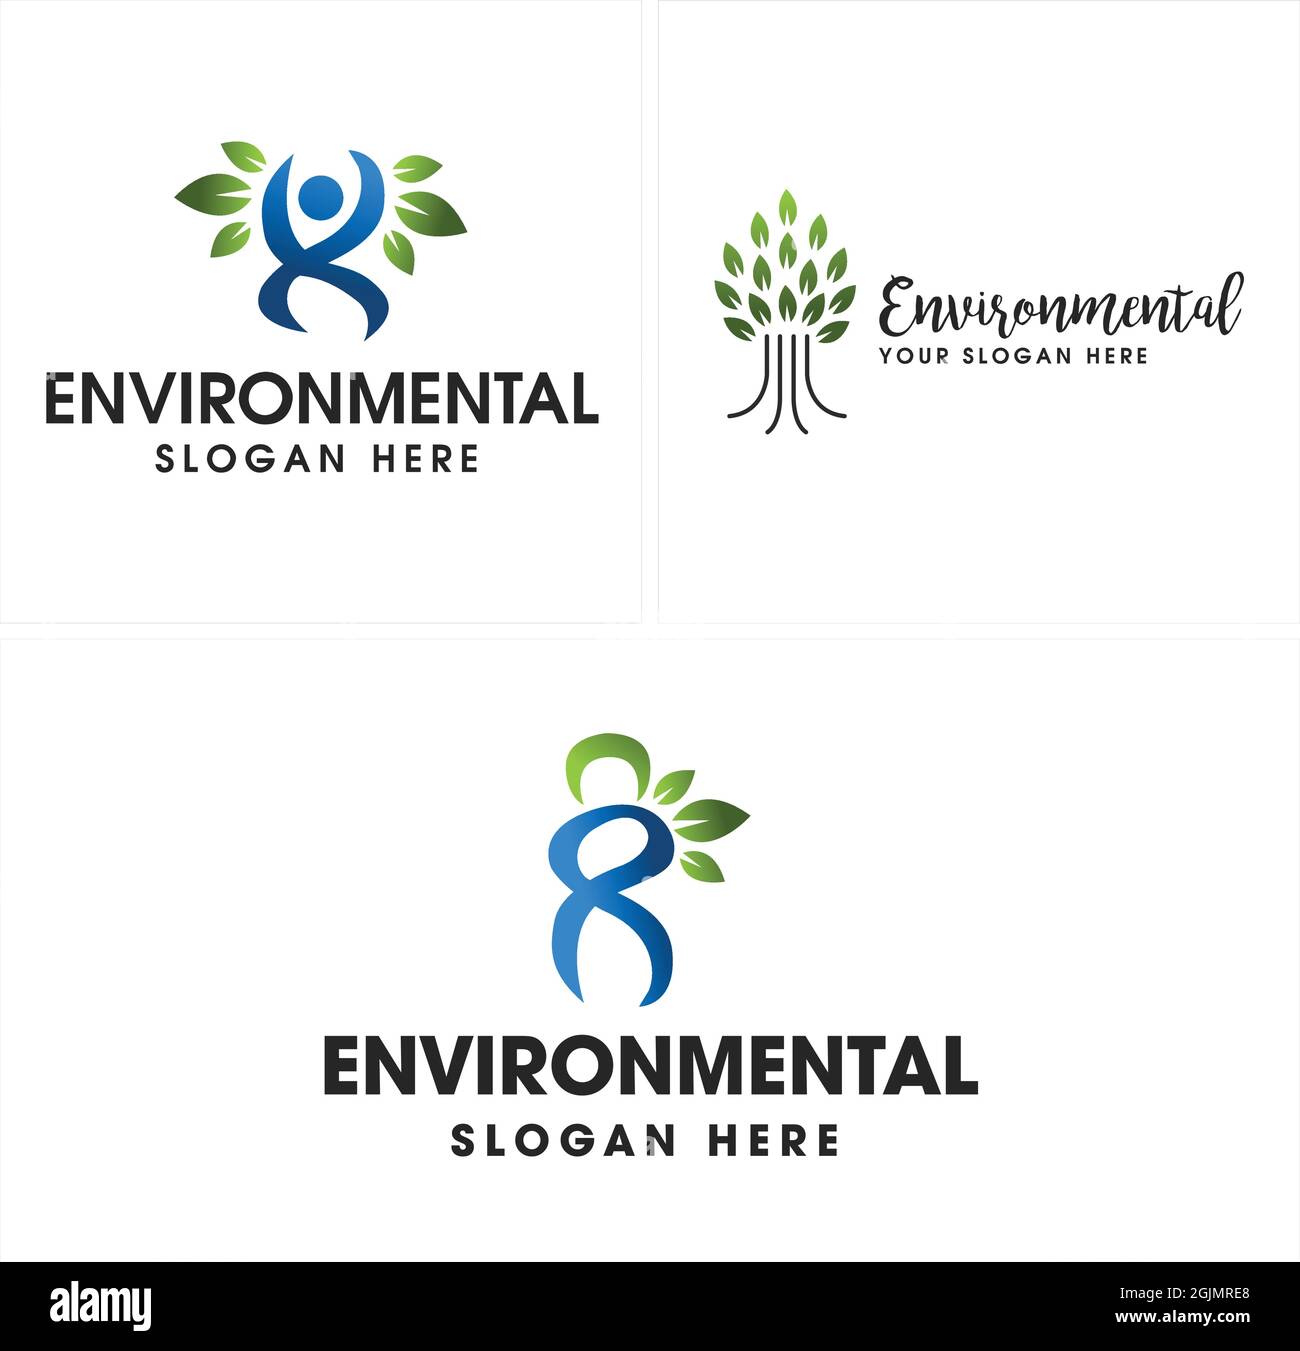 Umwelt gesunde Natur Baum Menschen Blatt grün Logo Design Stock Vektor